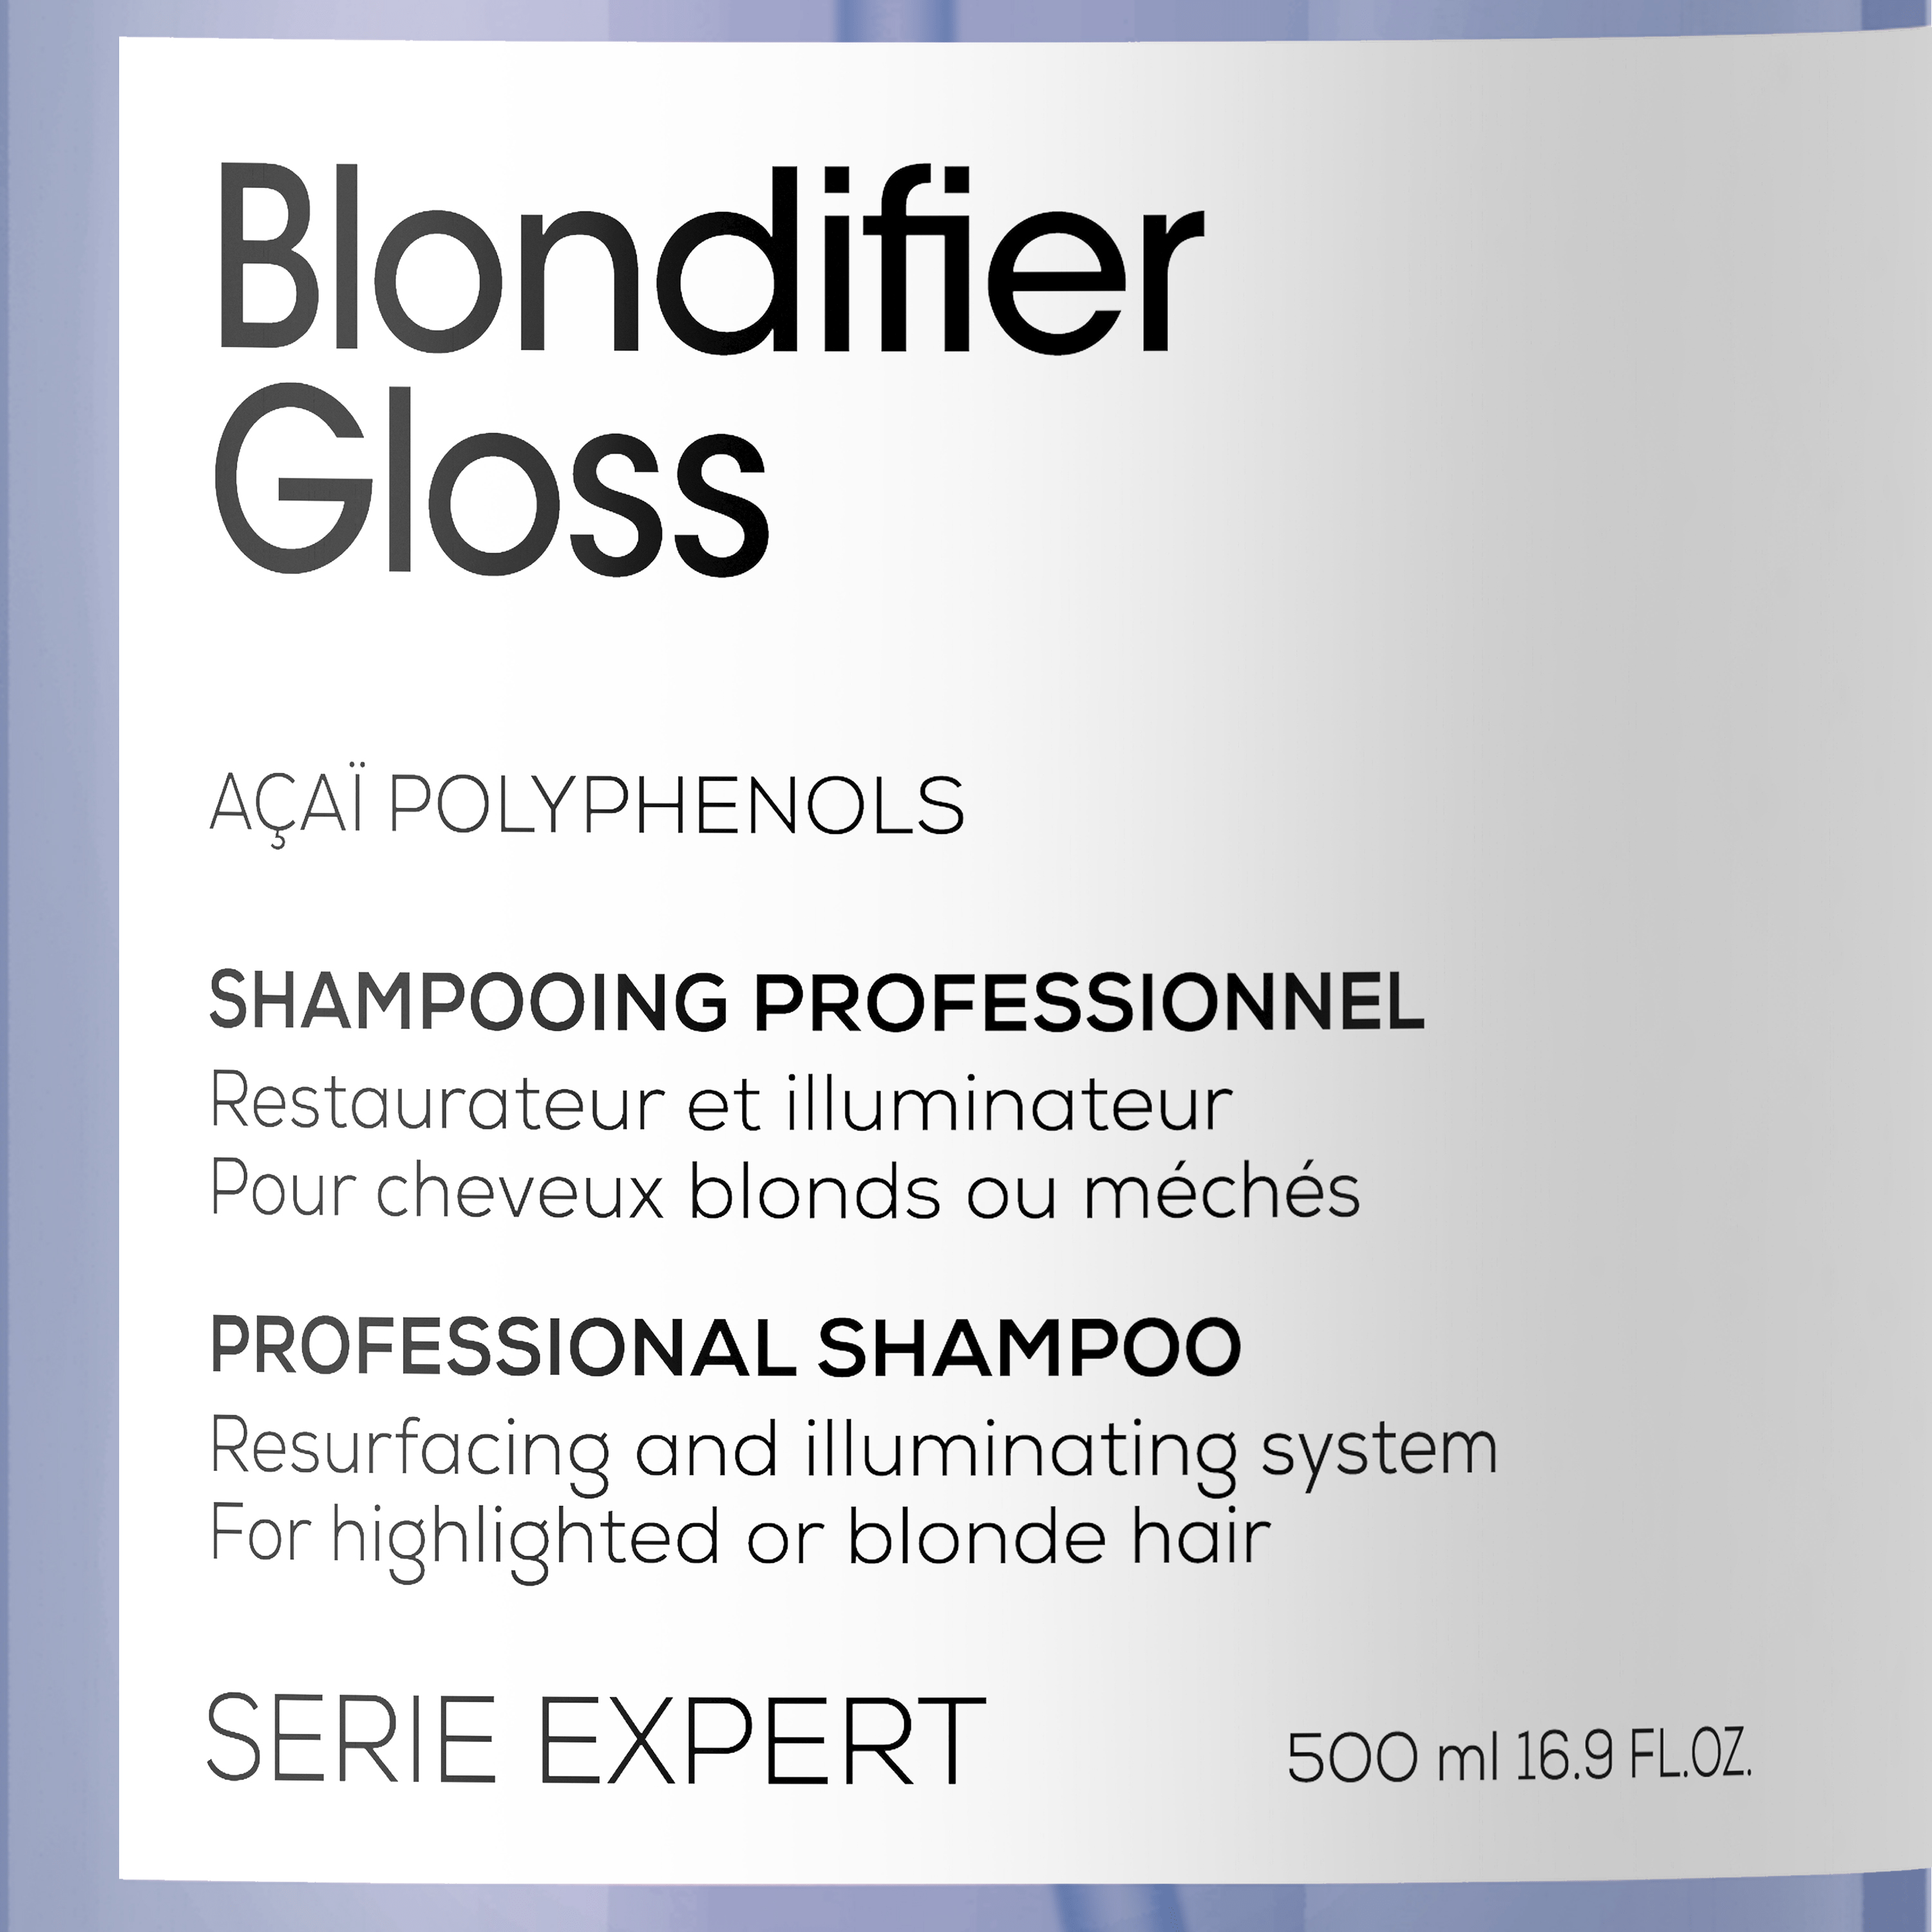 L'Oréal Professionnel Champú Blondifier Gloss 500ML Roberta Beauty Club